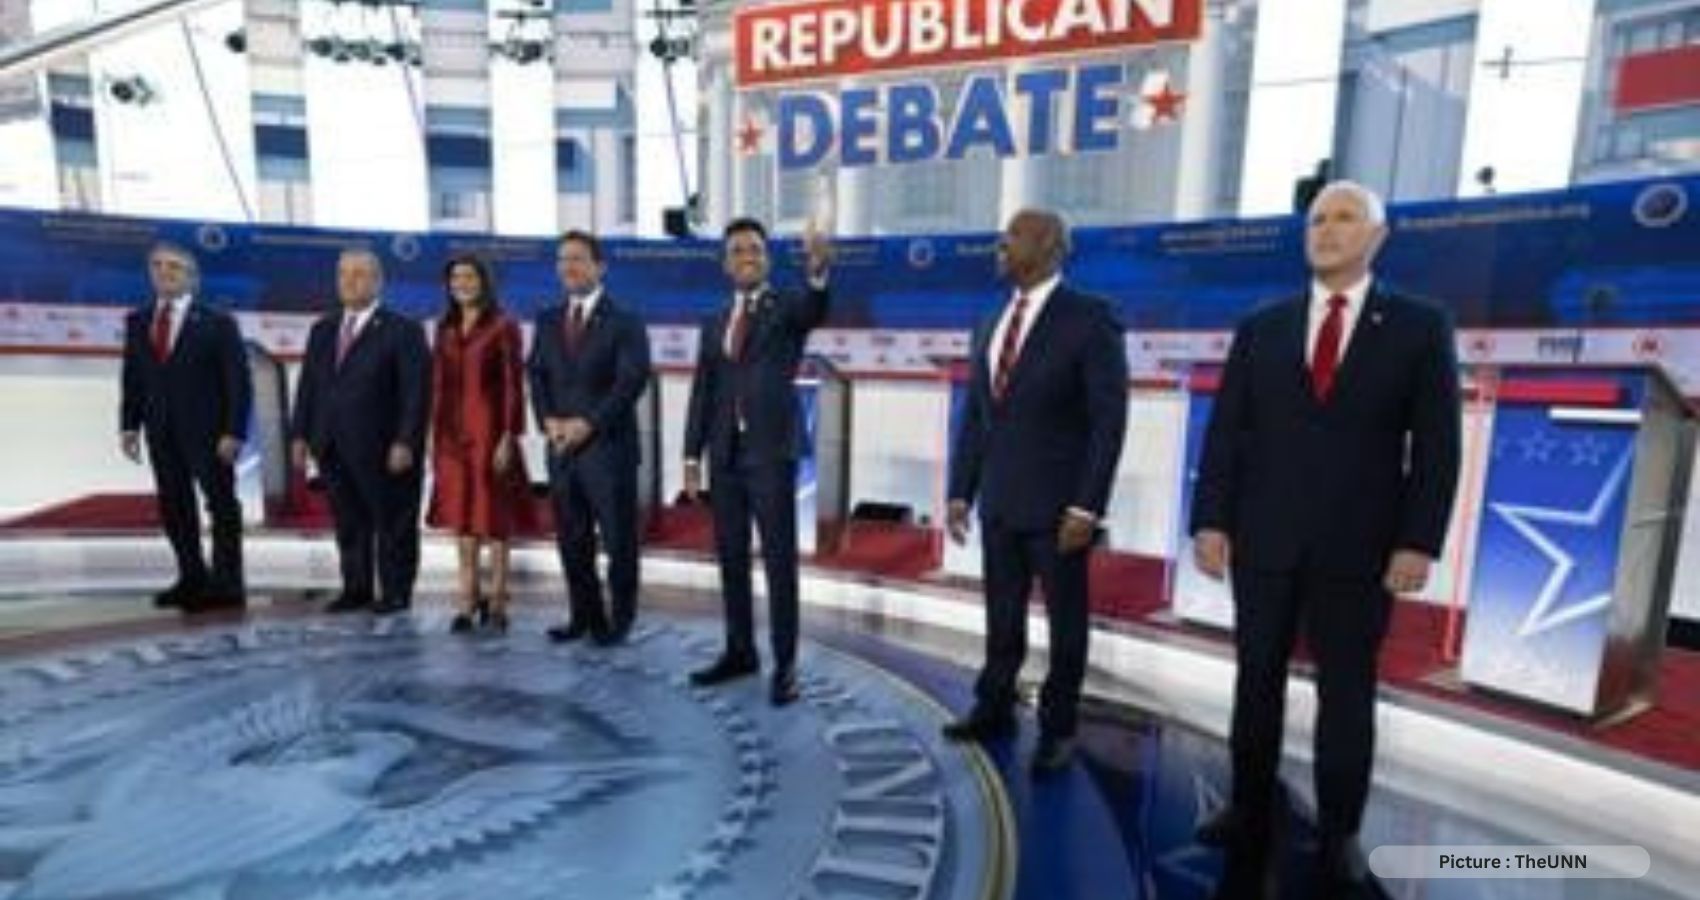 5 Takeaways From Another Trump-Free Republican Debate